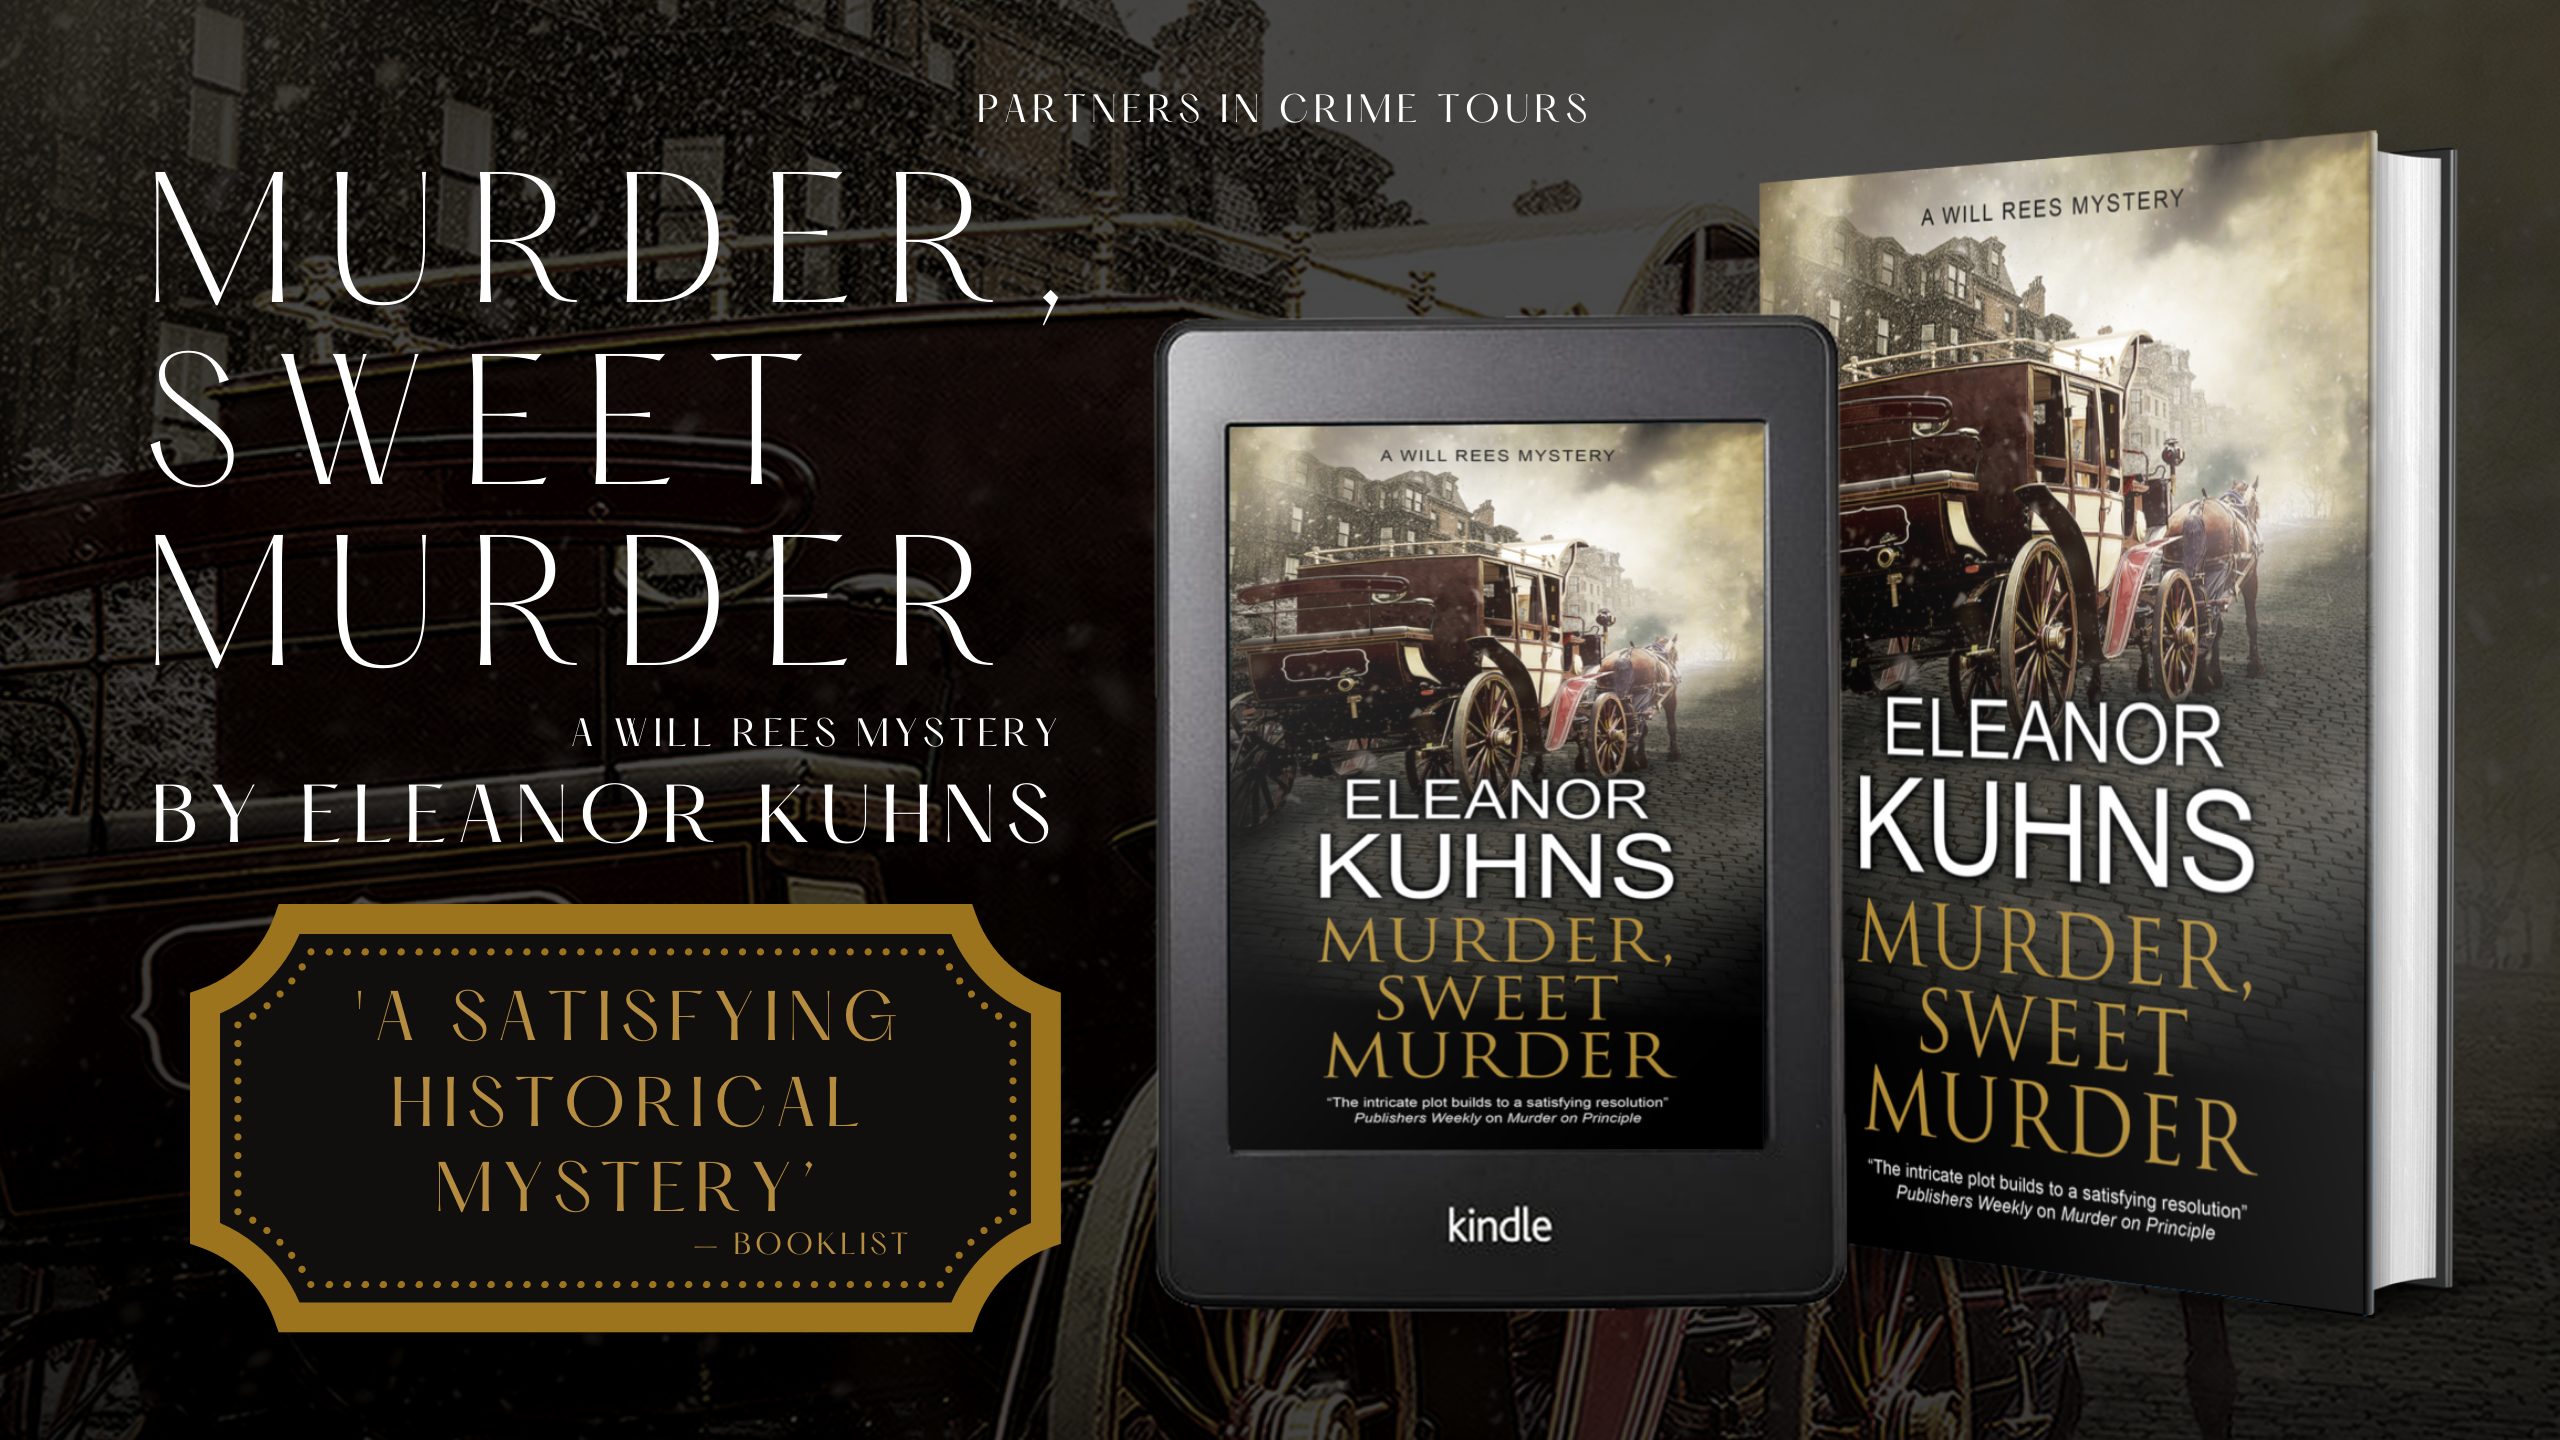 Murder, Sweet Murder by Eleanor Kuhns